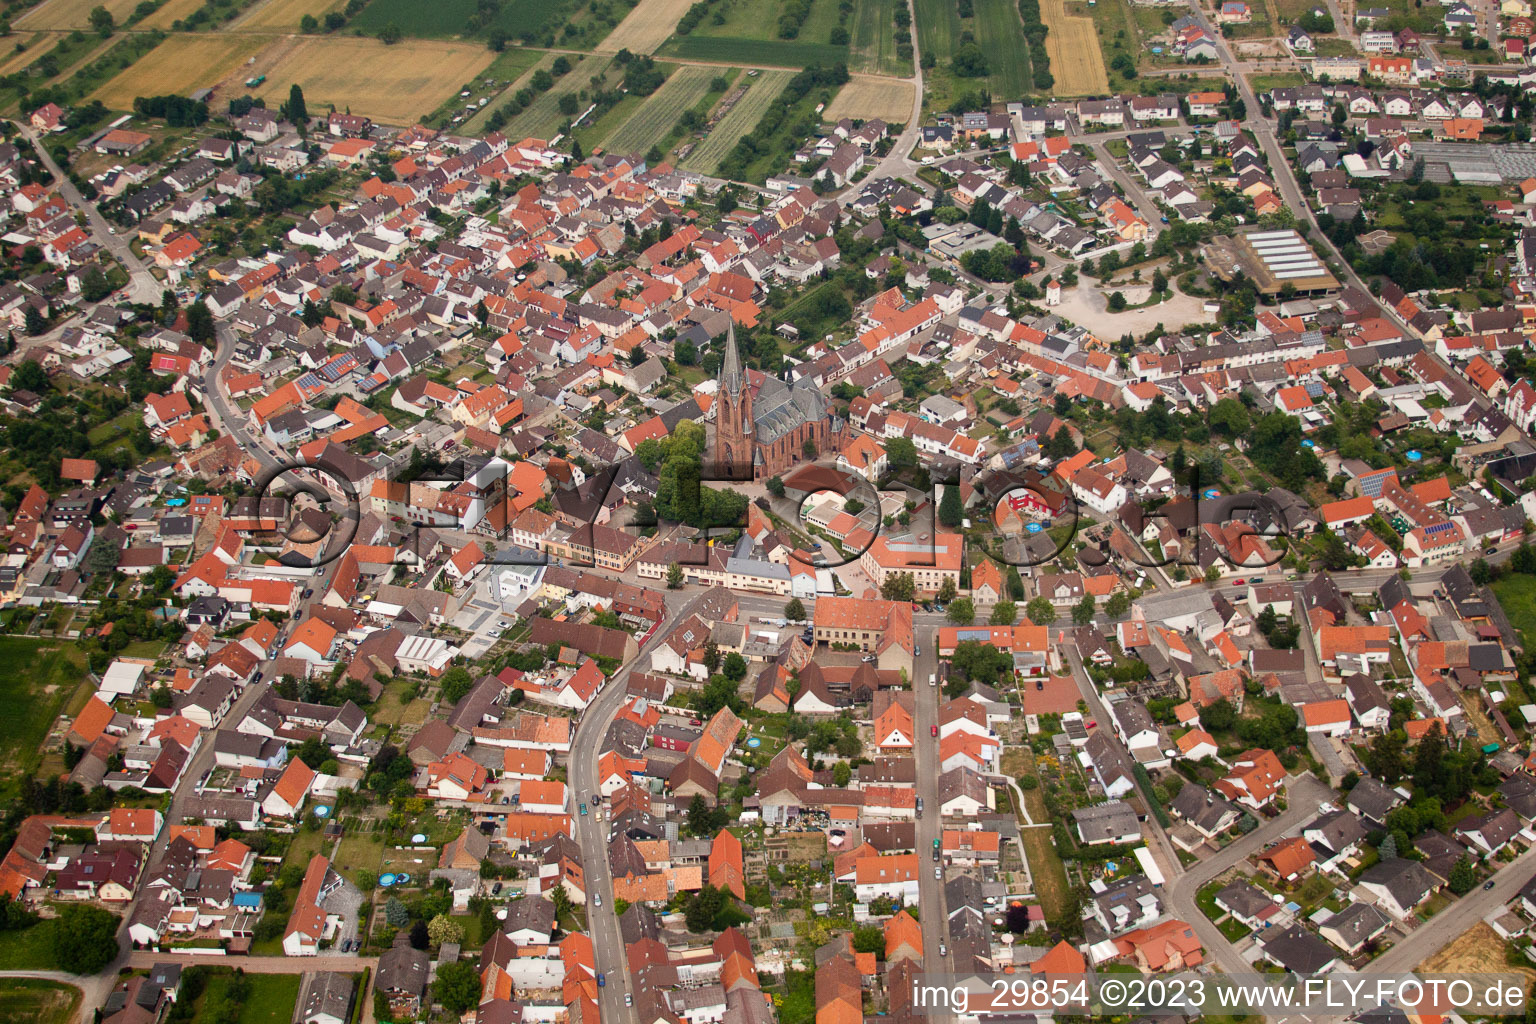 Quartier Rheinsheim in Philippsburg dans le département Bade-Wurtemberg, Allemagne vu d'un drone